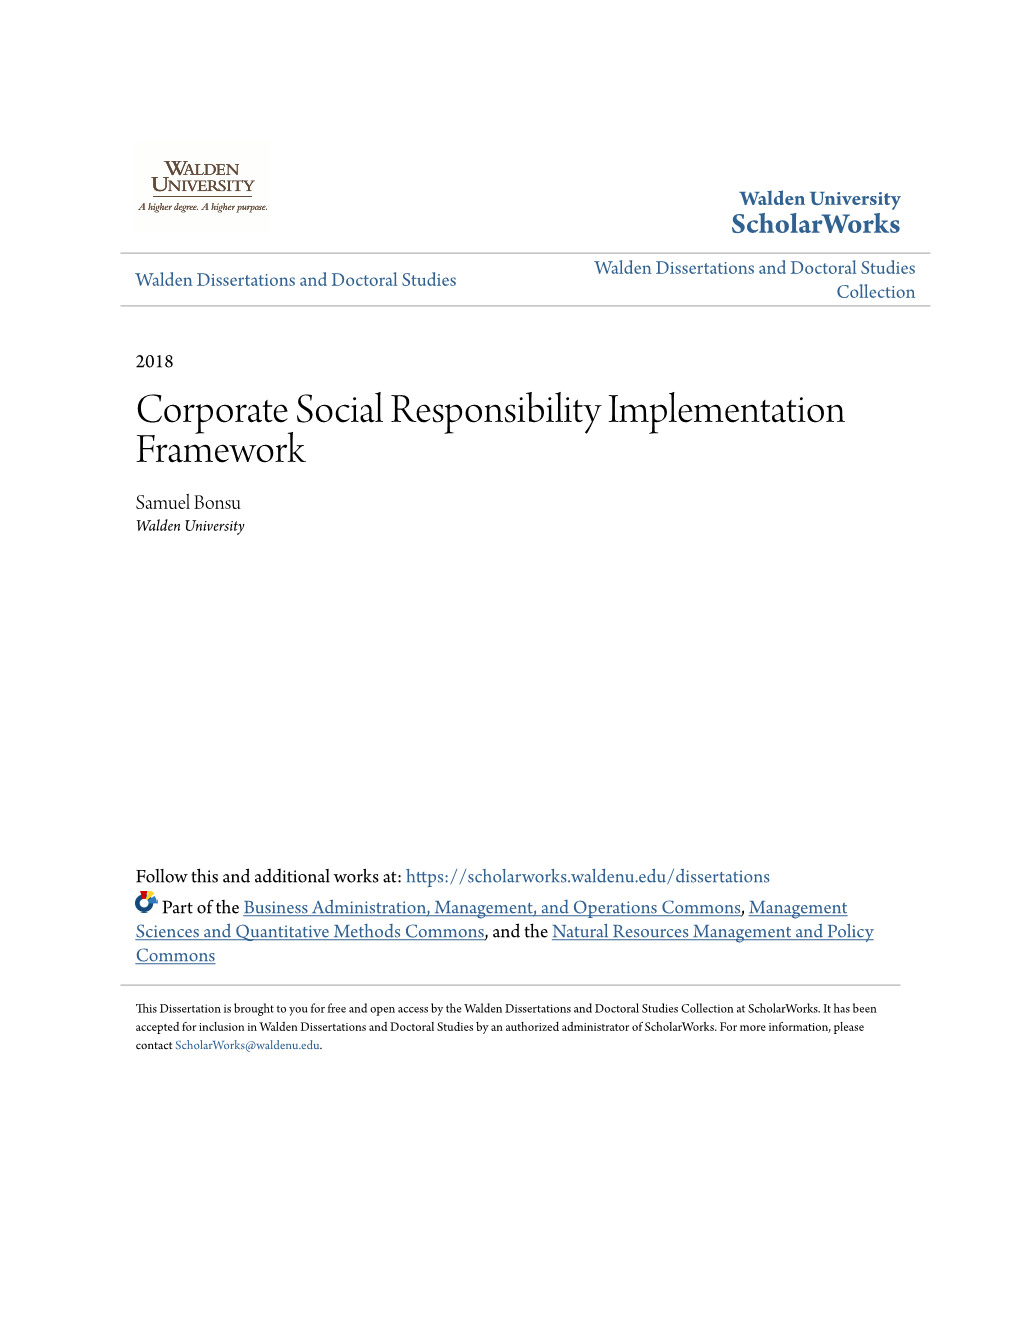 Corporate Social Responsibility Implementation Framework Samuel Bonsu Walden University